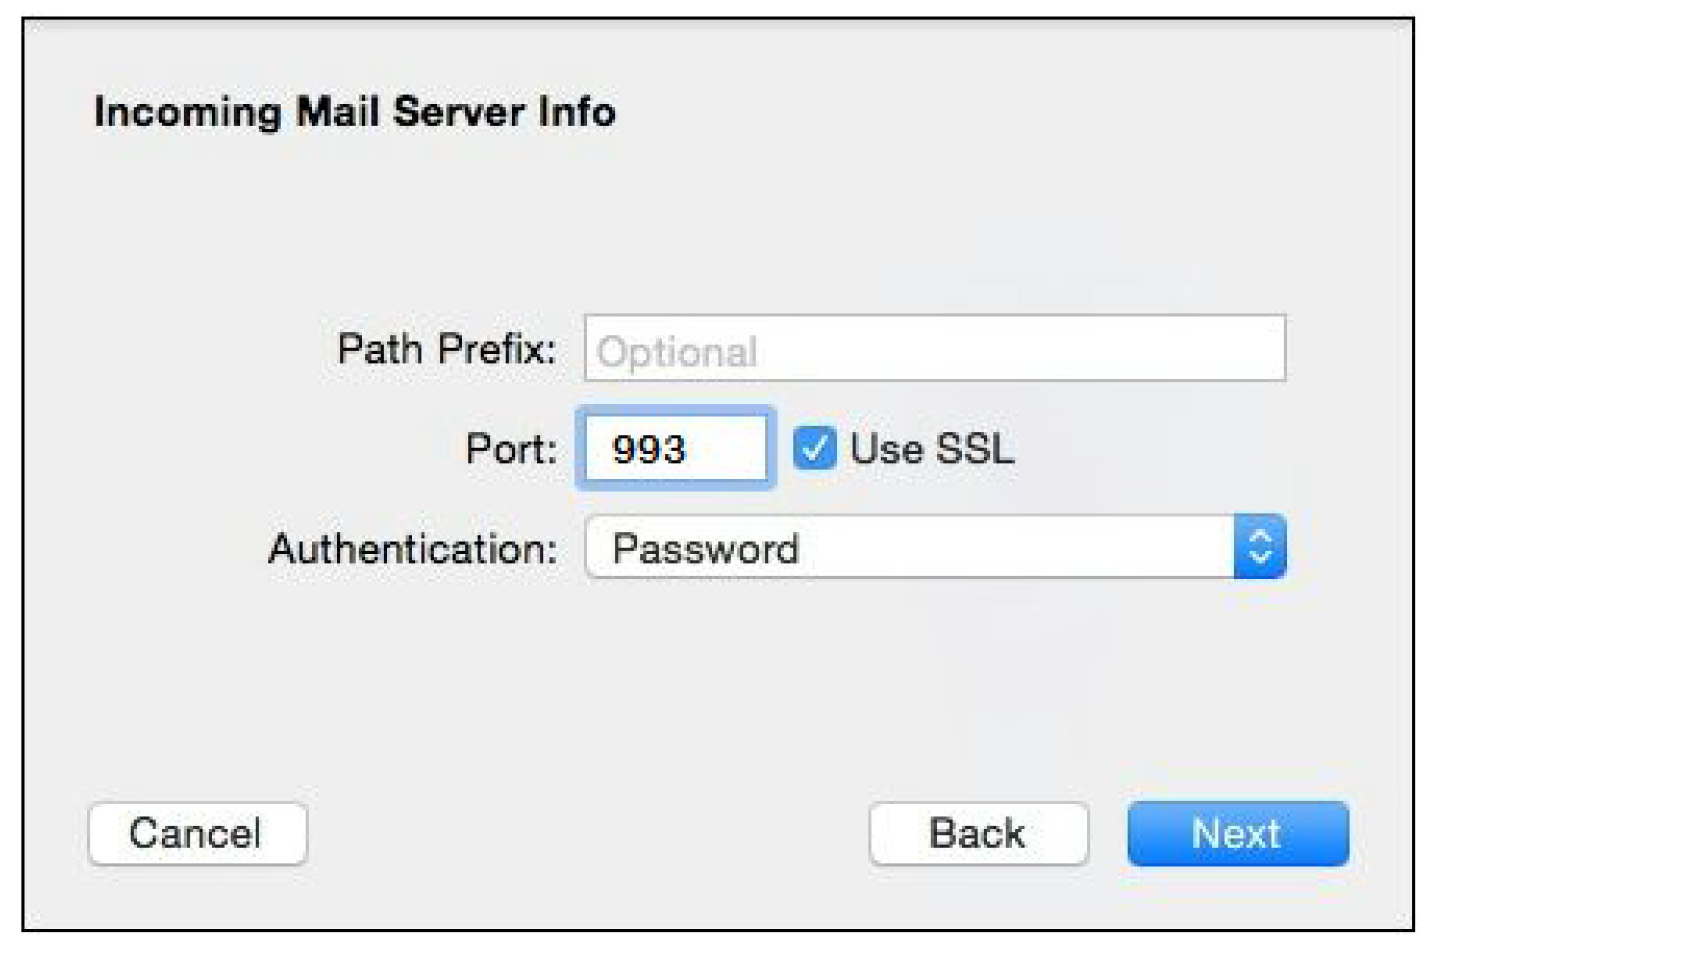 Path prefixes. Почта эпл префикс. Mail_SMTP_prefix. Port optional как узнать. Mail_SMTP_prefix в MODX.